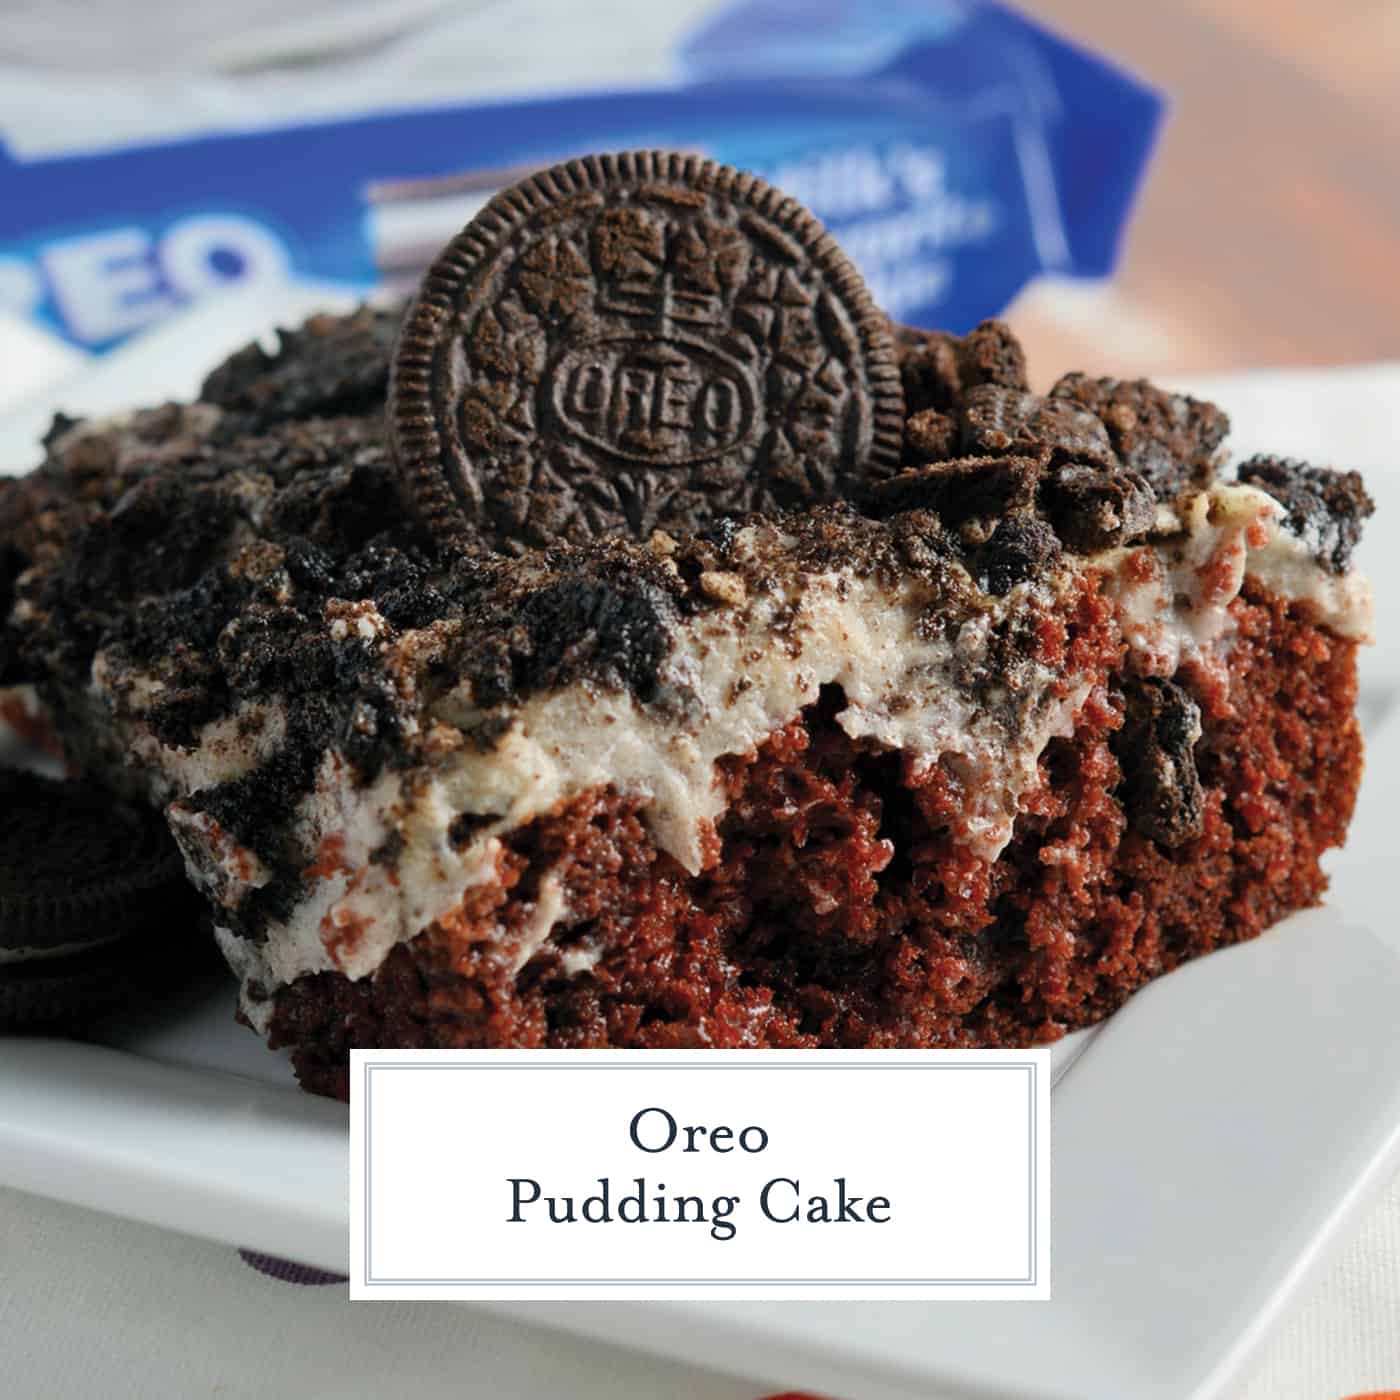 Oreo Pudding Cake is a poke recipe perfect for an easy party dessert. If you like Oreo balls, you'll love this easy cake recipe! #oreocookierecipes #oreopuddingcake #pokecakerecipes www.savoryexperiments.com 